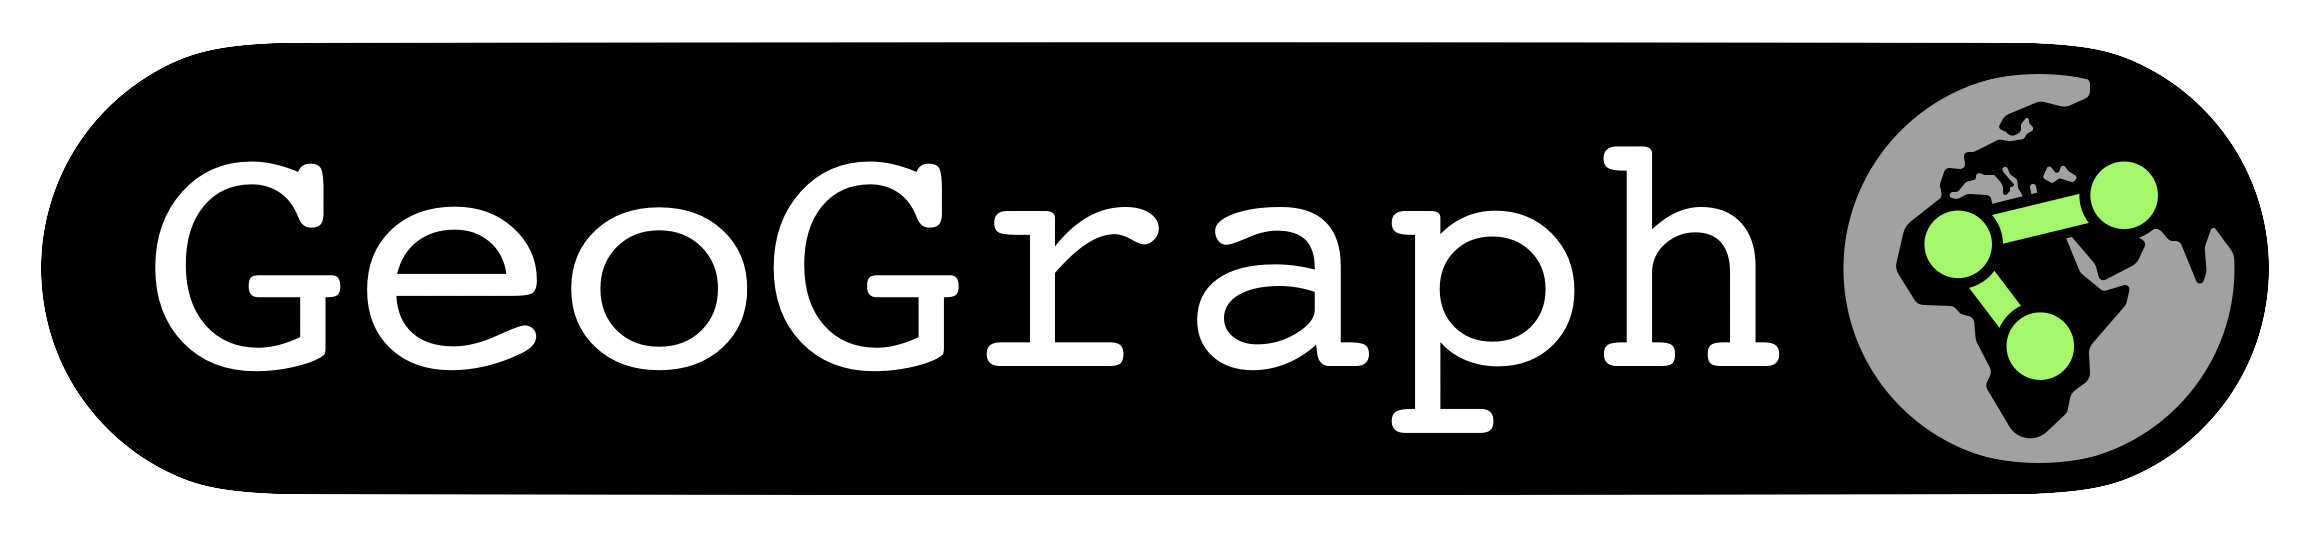 geograph_logo.png